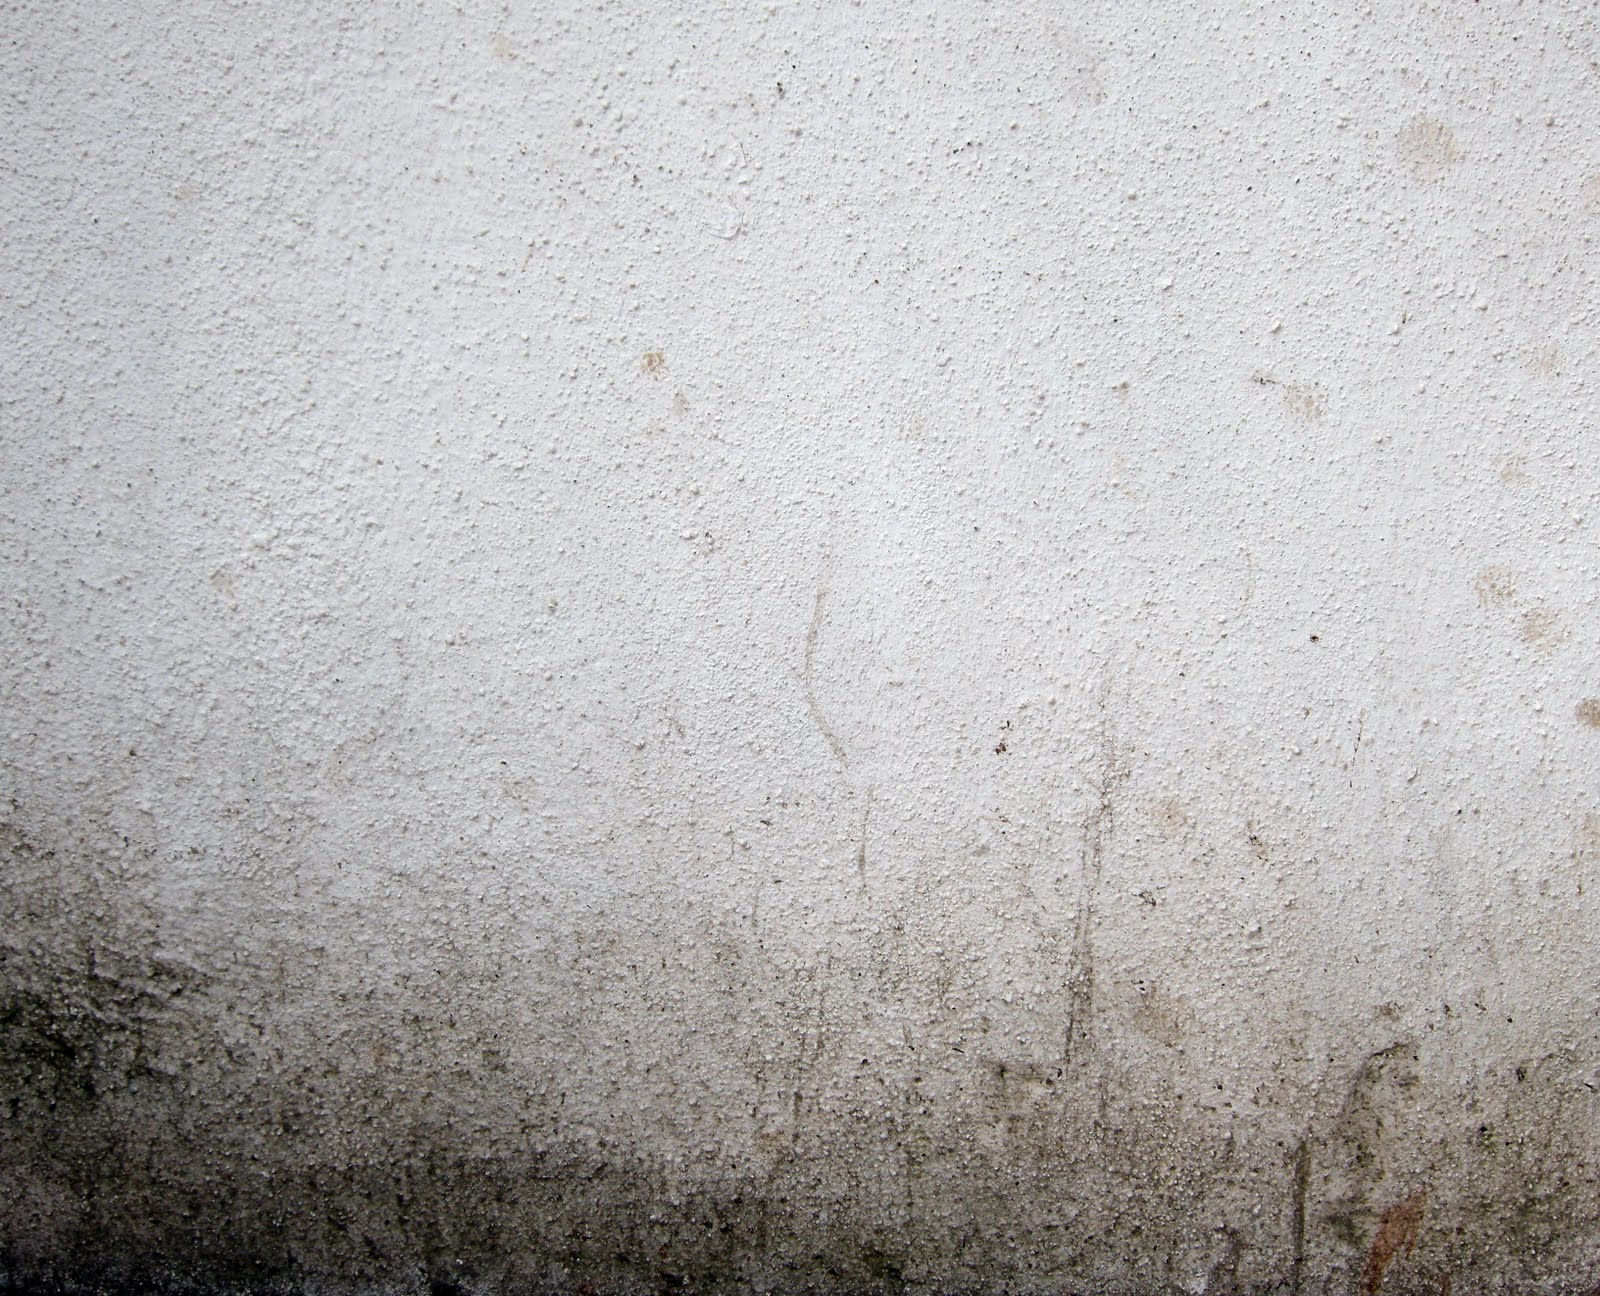 White concrete. Бетон 816 ЛДСП. Текстура бетона. Текстура стены. Мокрый бетон текстура.